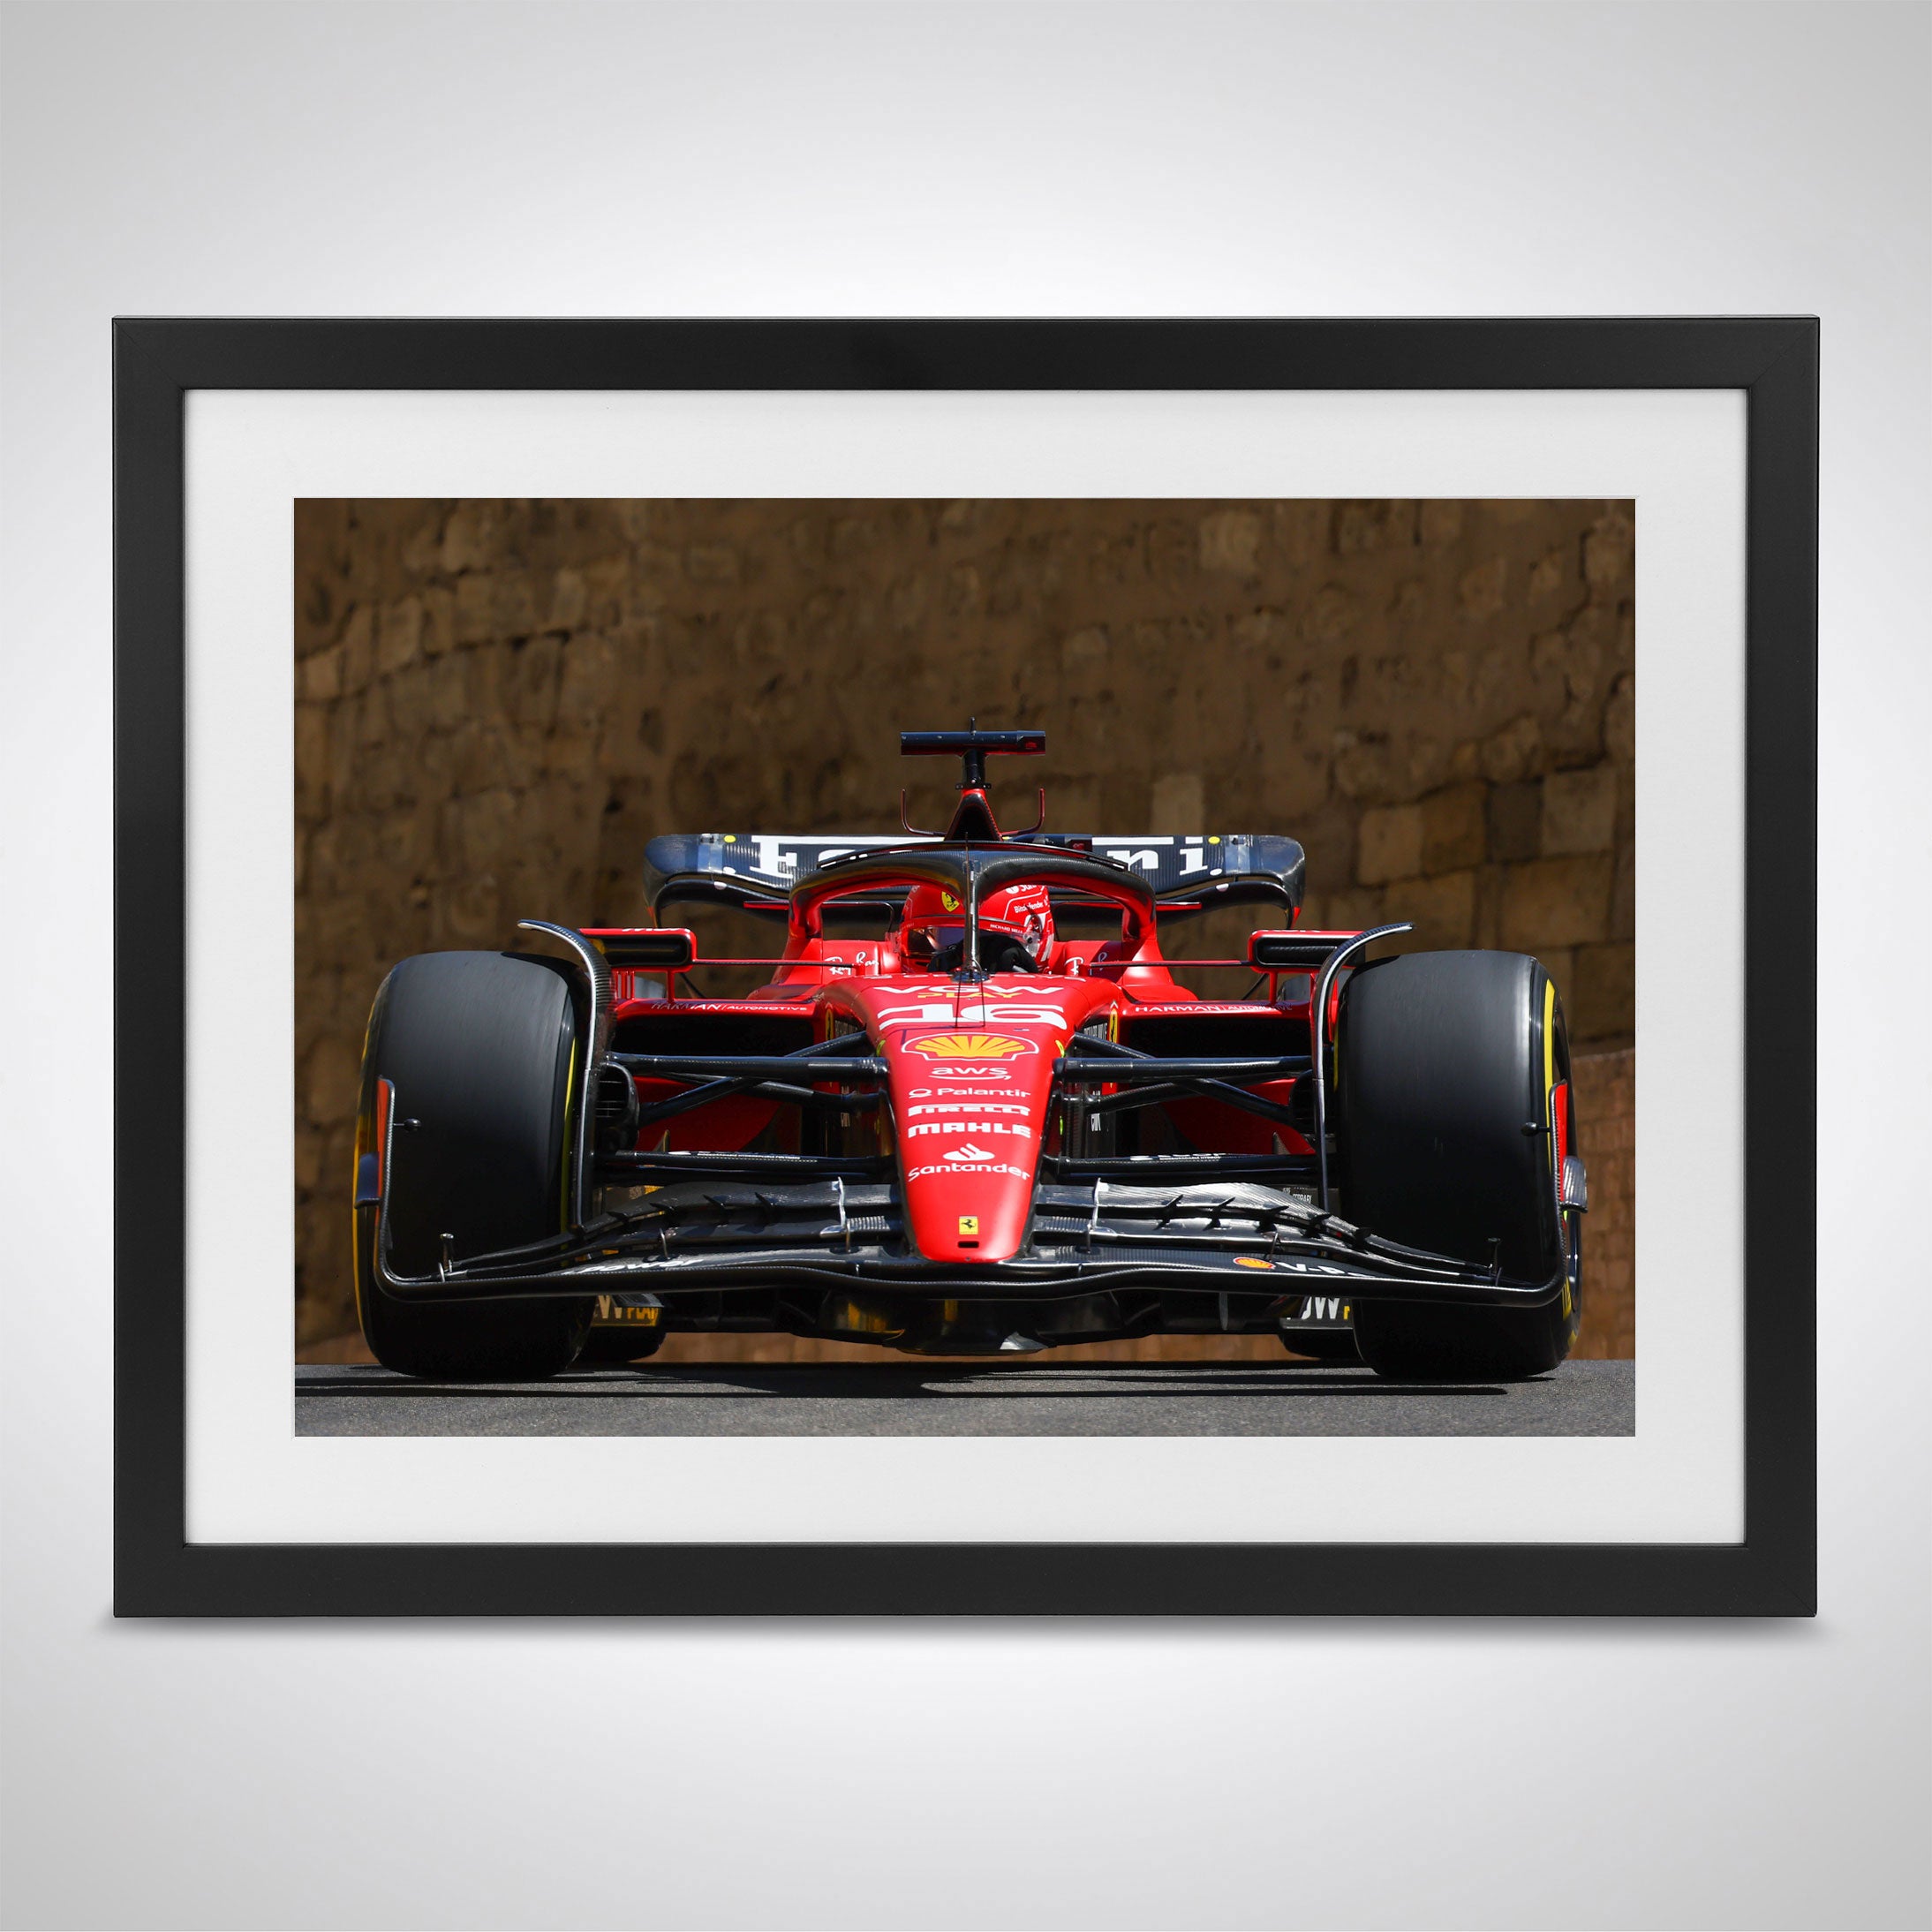 Charles Leclerc, F1 Poster, Canvas, Scuderia Ferrari, F1-75 Car